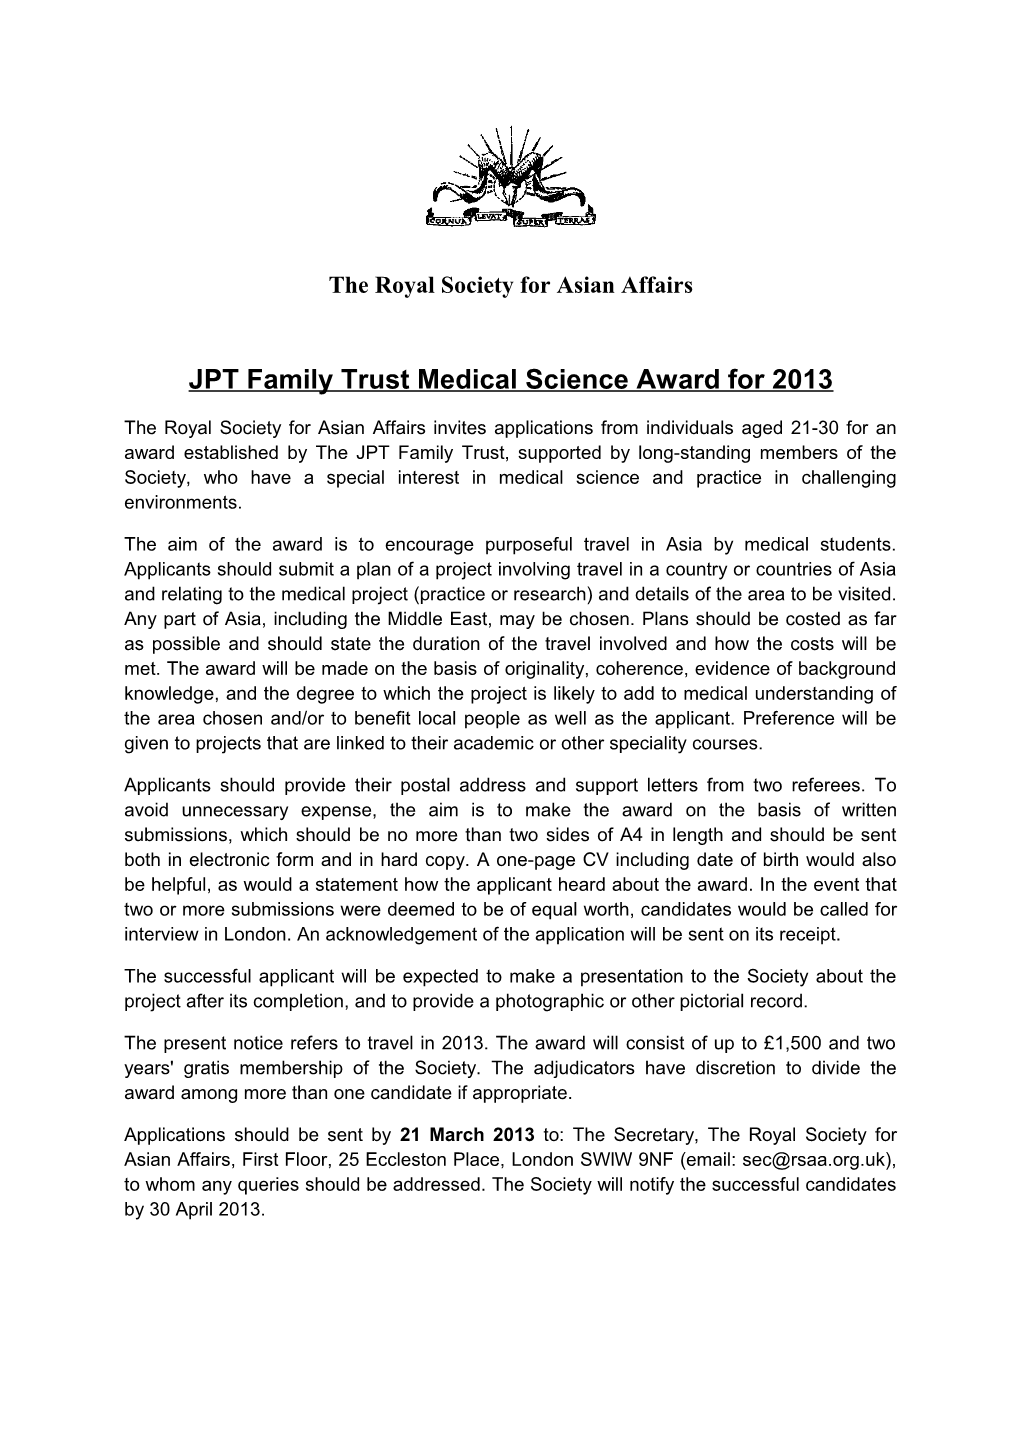 JPT Family Trust Medical Science Award for 2013